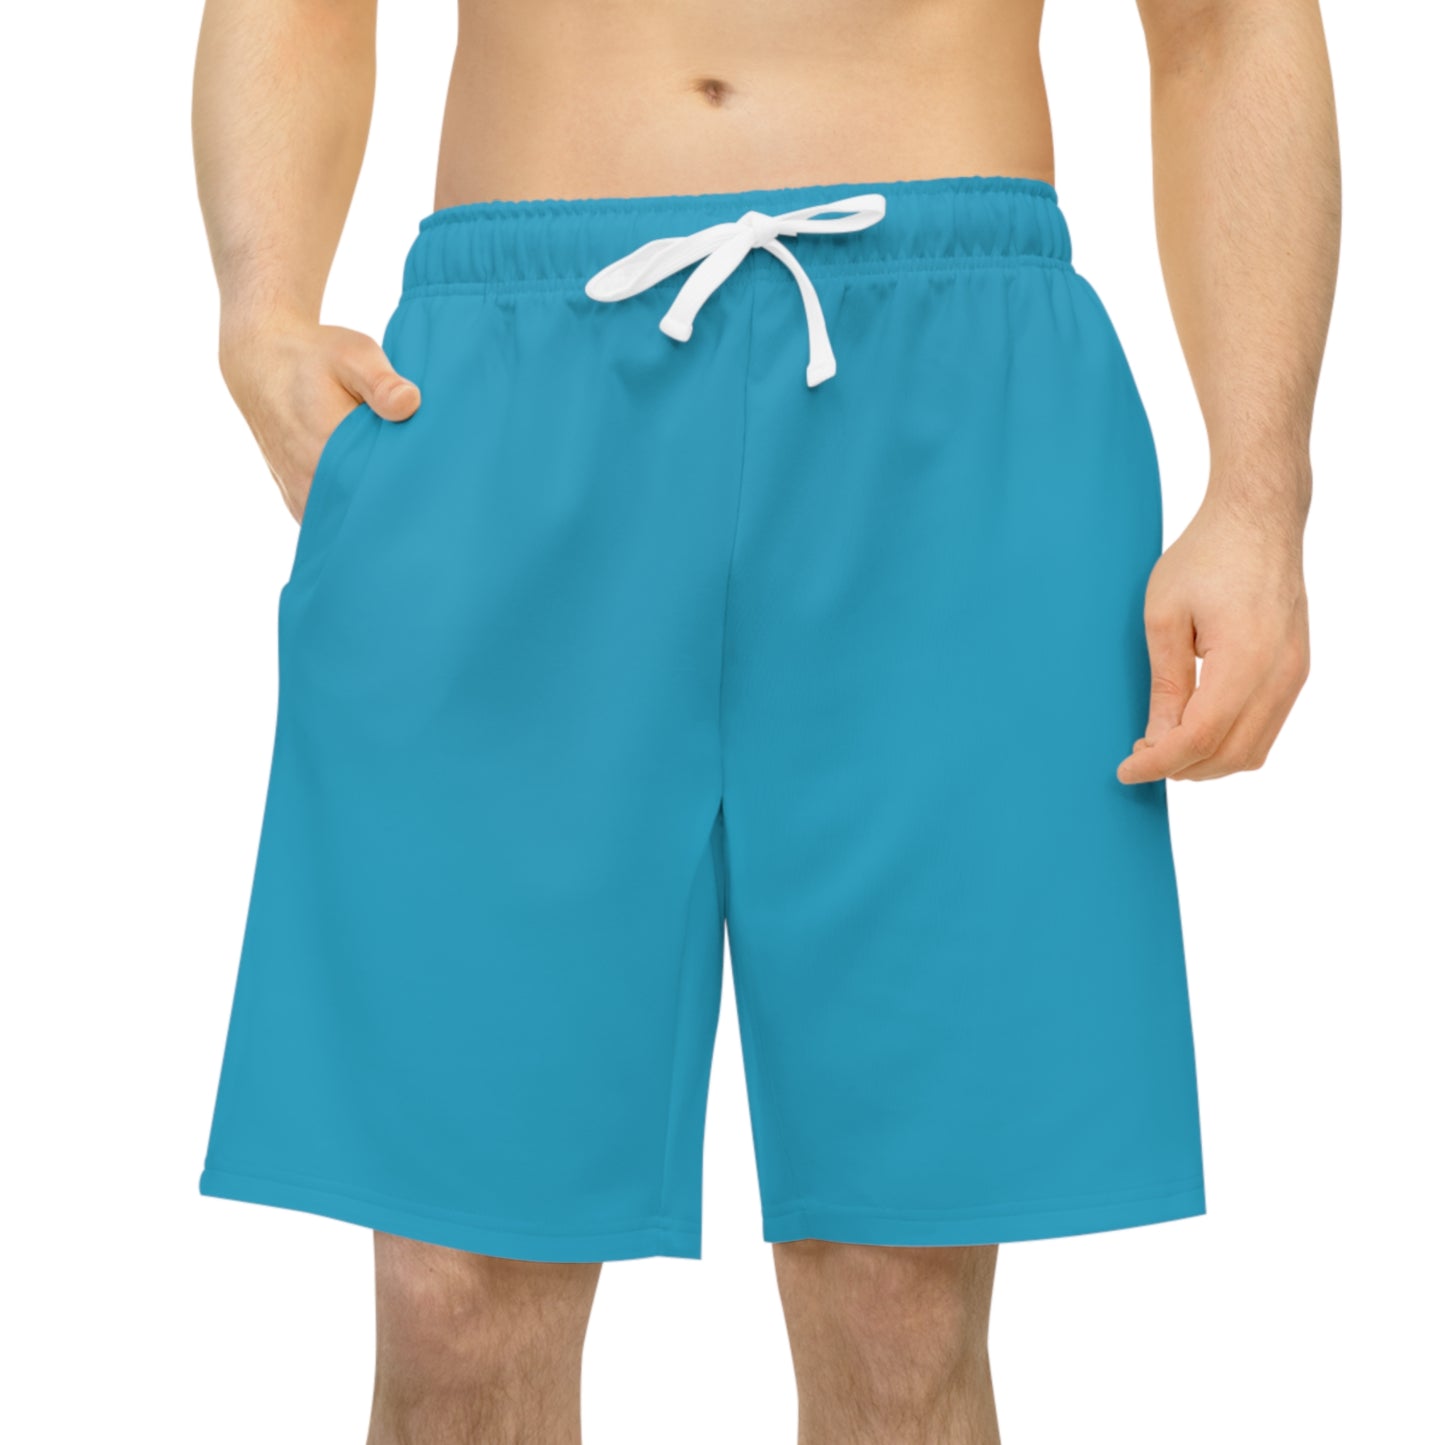 WrapCheck Sports Men's Turquoise Athletic Shorts